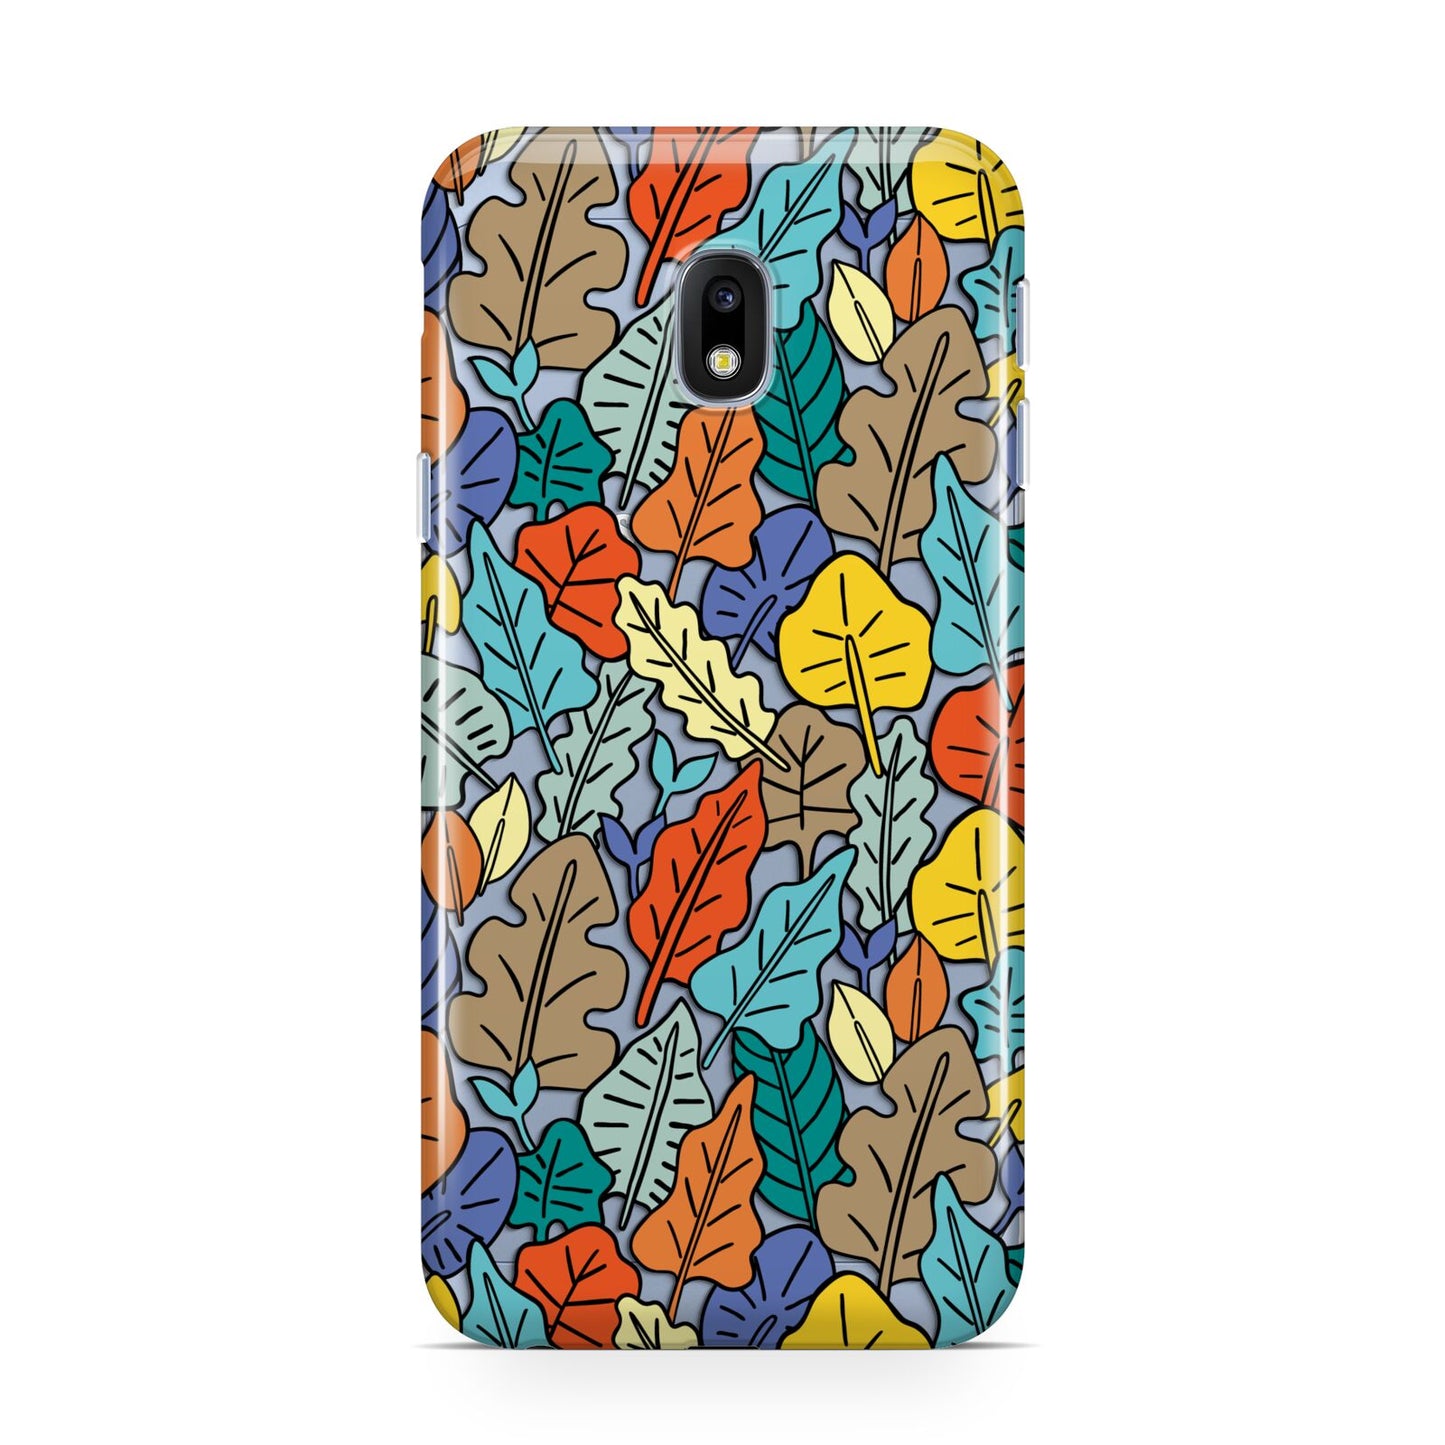 Autumn Leaves Samsung Galaxy J3 2017 Case